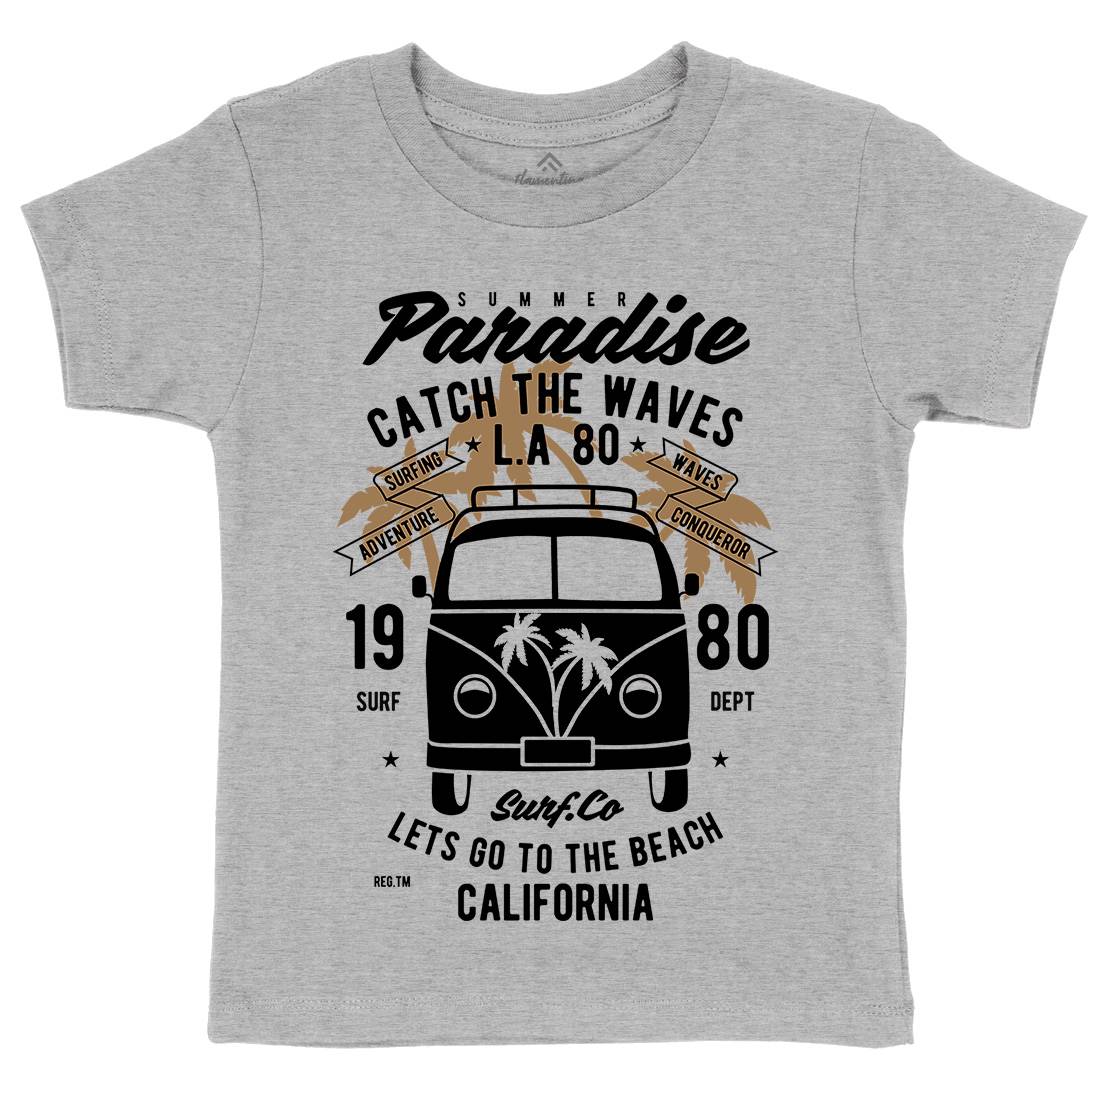 Catch The Waves Surfing Van Kids Organic Crew Neck T-Shirt Surf B393